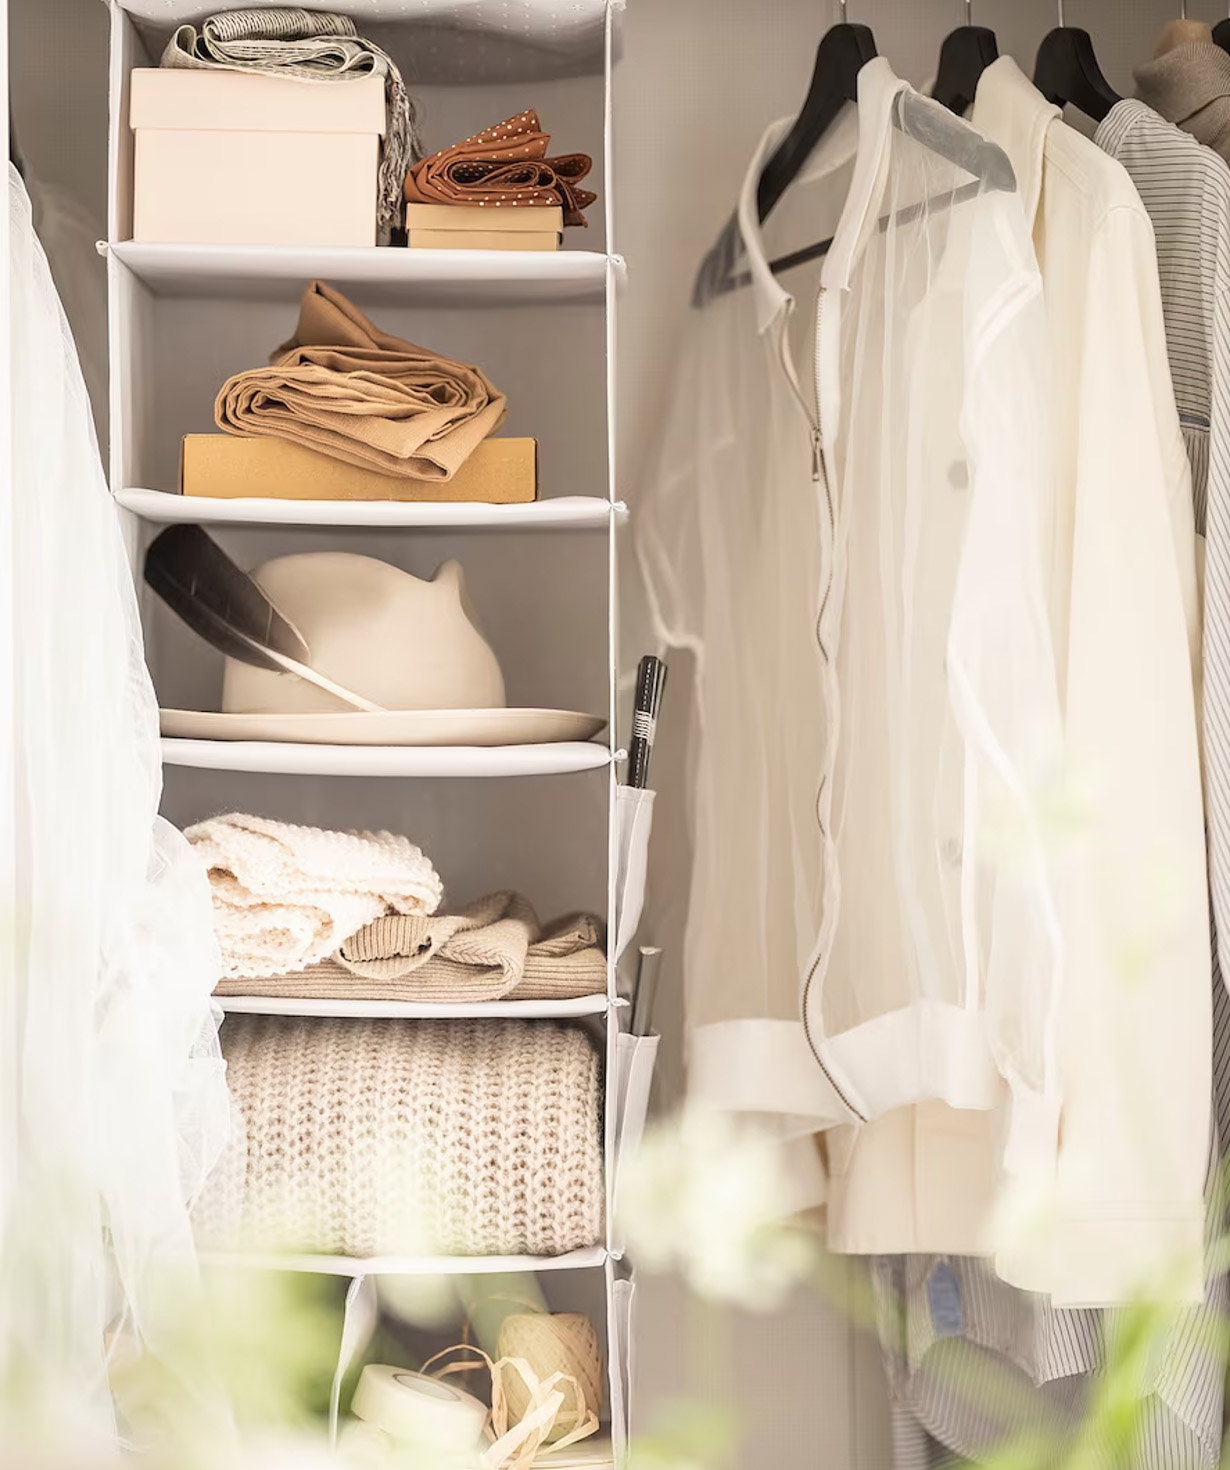 Cloth cabinet ''BLÄDDRARE'' hanging